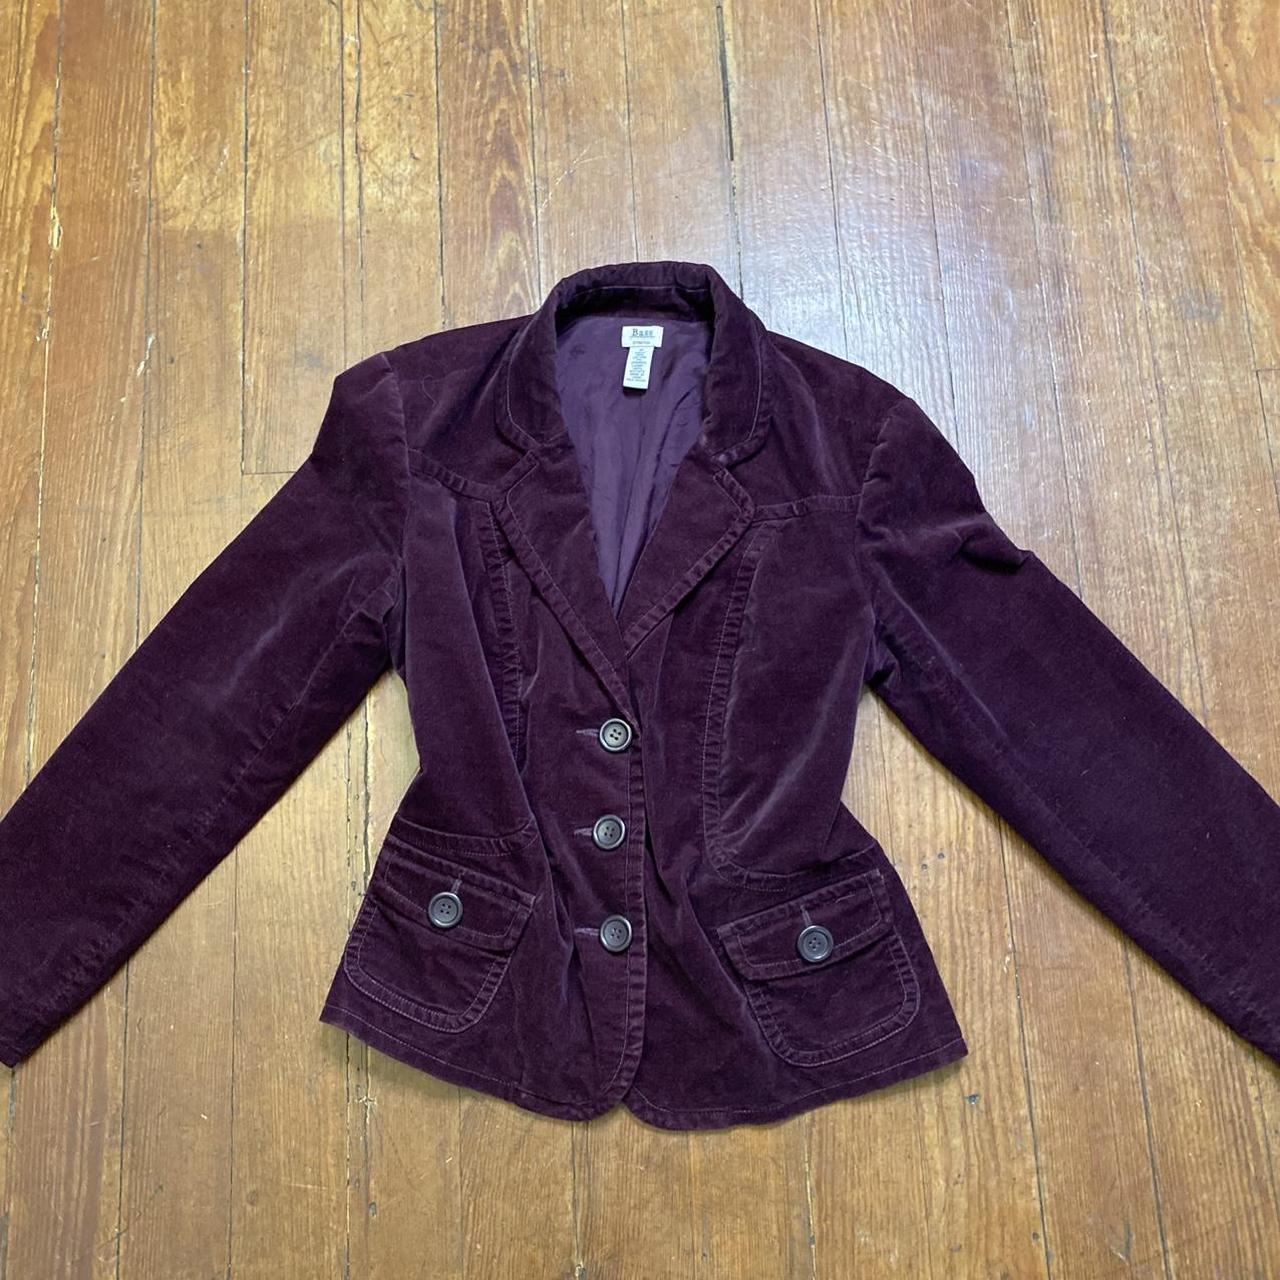 Purple velvet #whimsigoth button up blazer 💜 I’m... - Depop